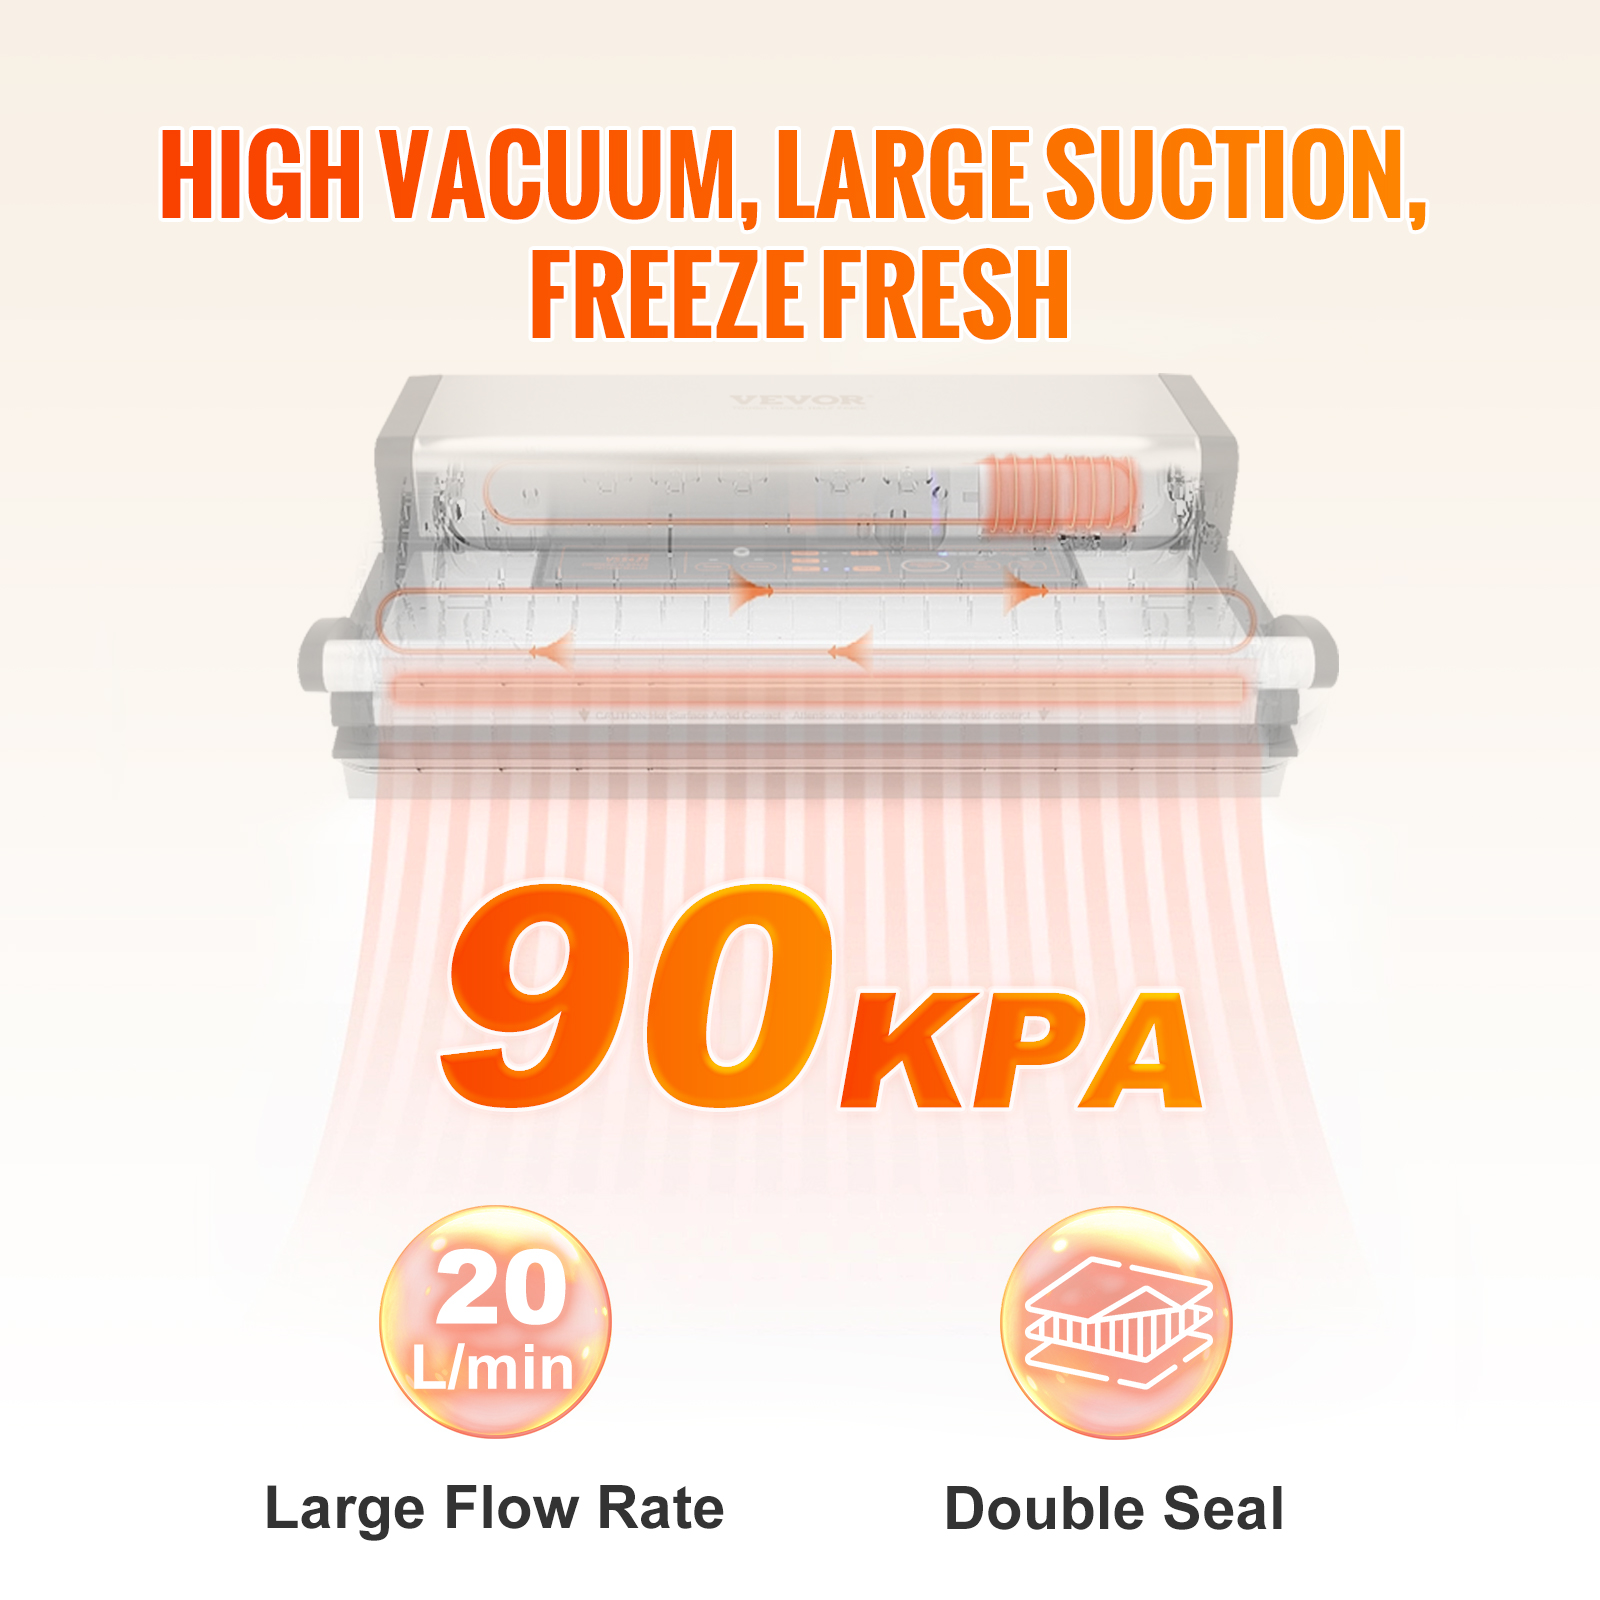 Vacuum Sealer Machine Full Automatic Food Sealer (95Kpa) Vacuum Sealers Bags for Food Air Sealing System for Food Sealer Dry Moist Food Preservation